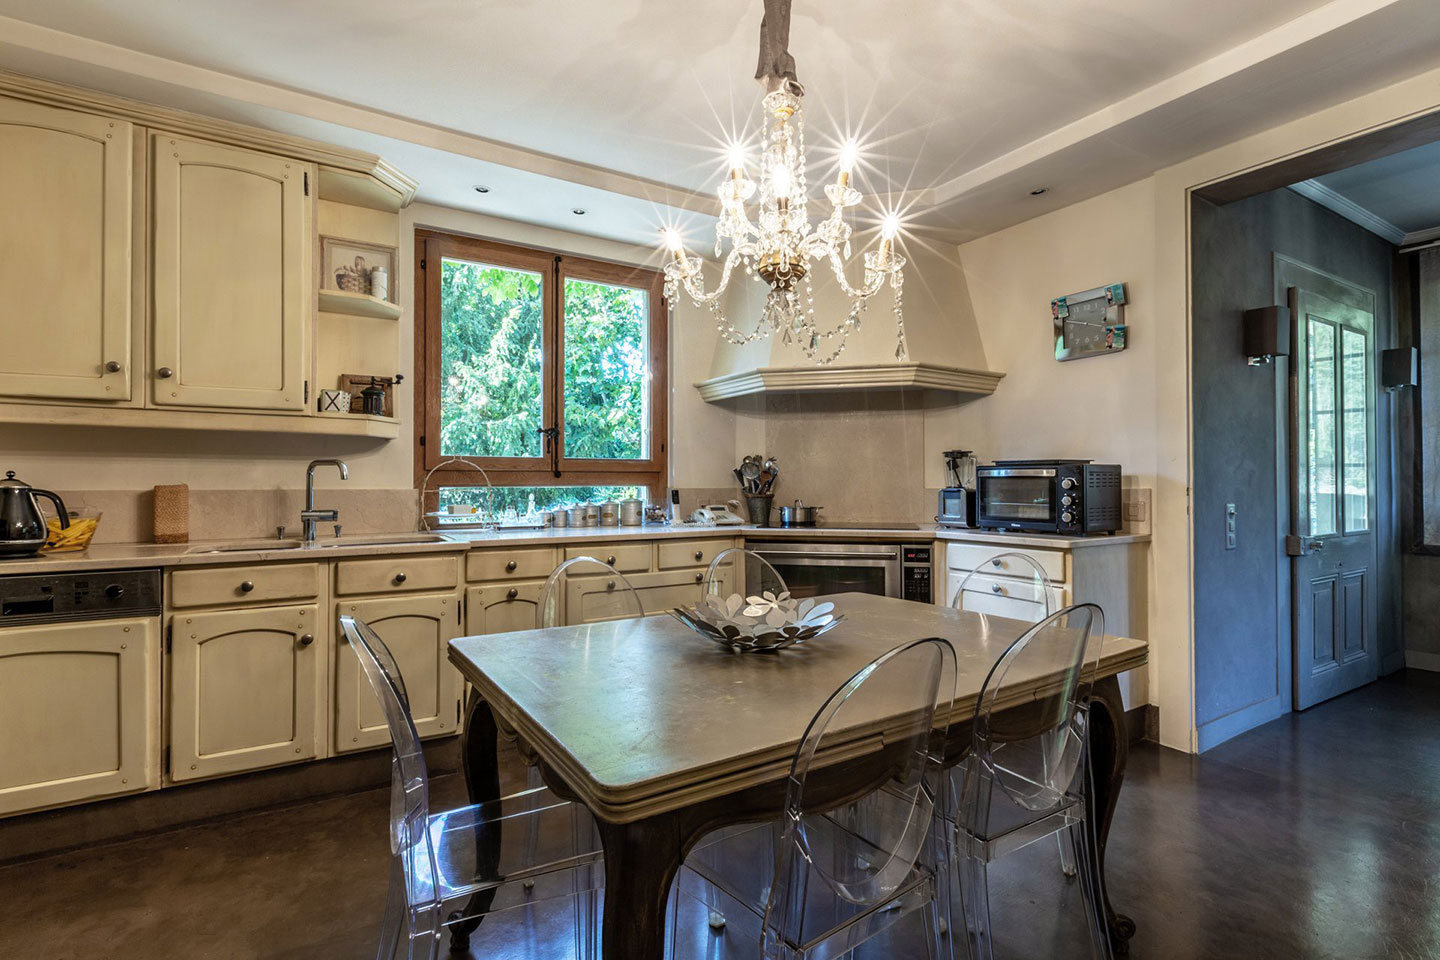 Splendid Property For Sale in Geneva Left Bank, Collonge-Bellerive | Kitchen | Presented by Finest International | Finest Residences